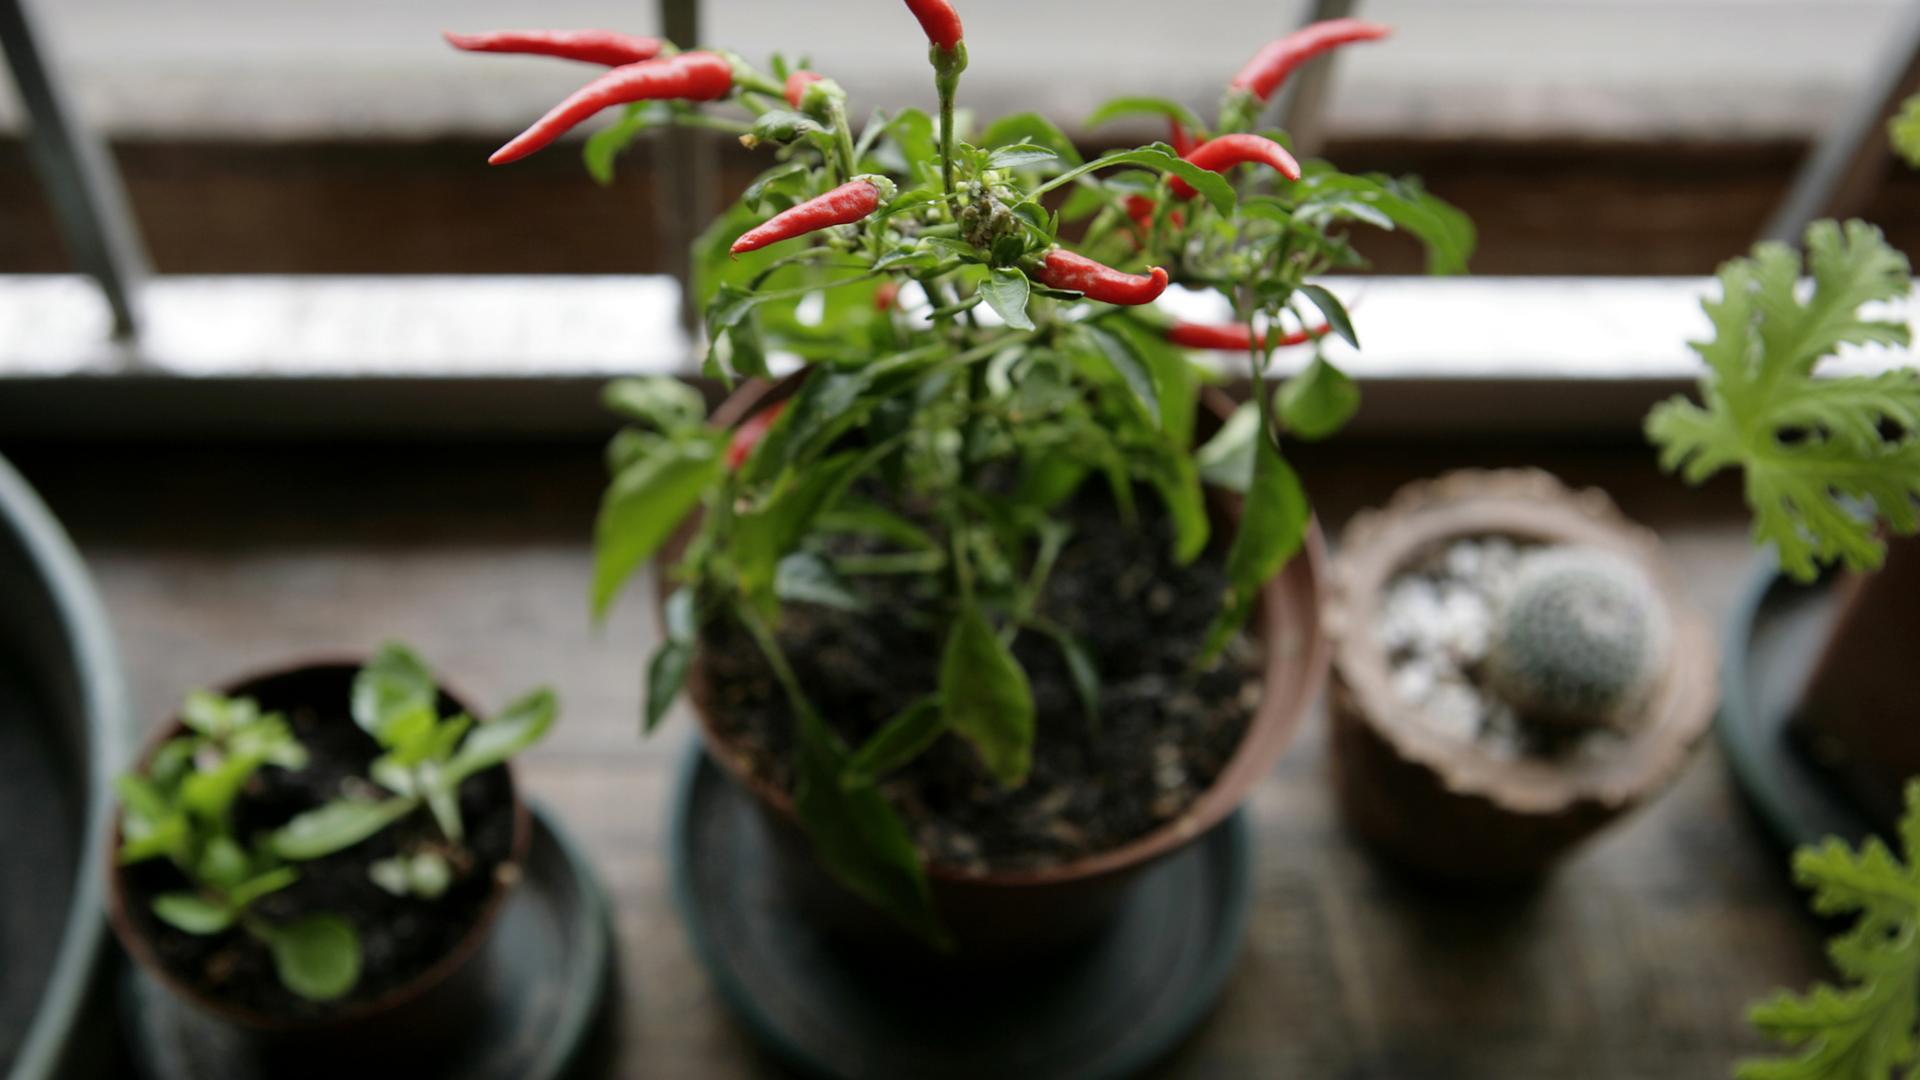 chili pflanze fensterbrett